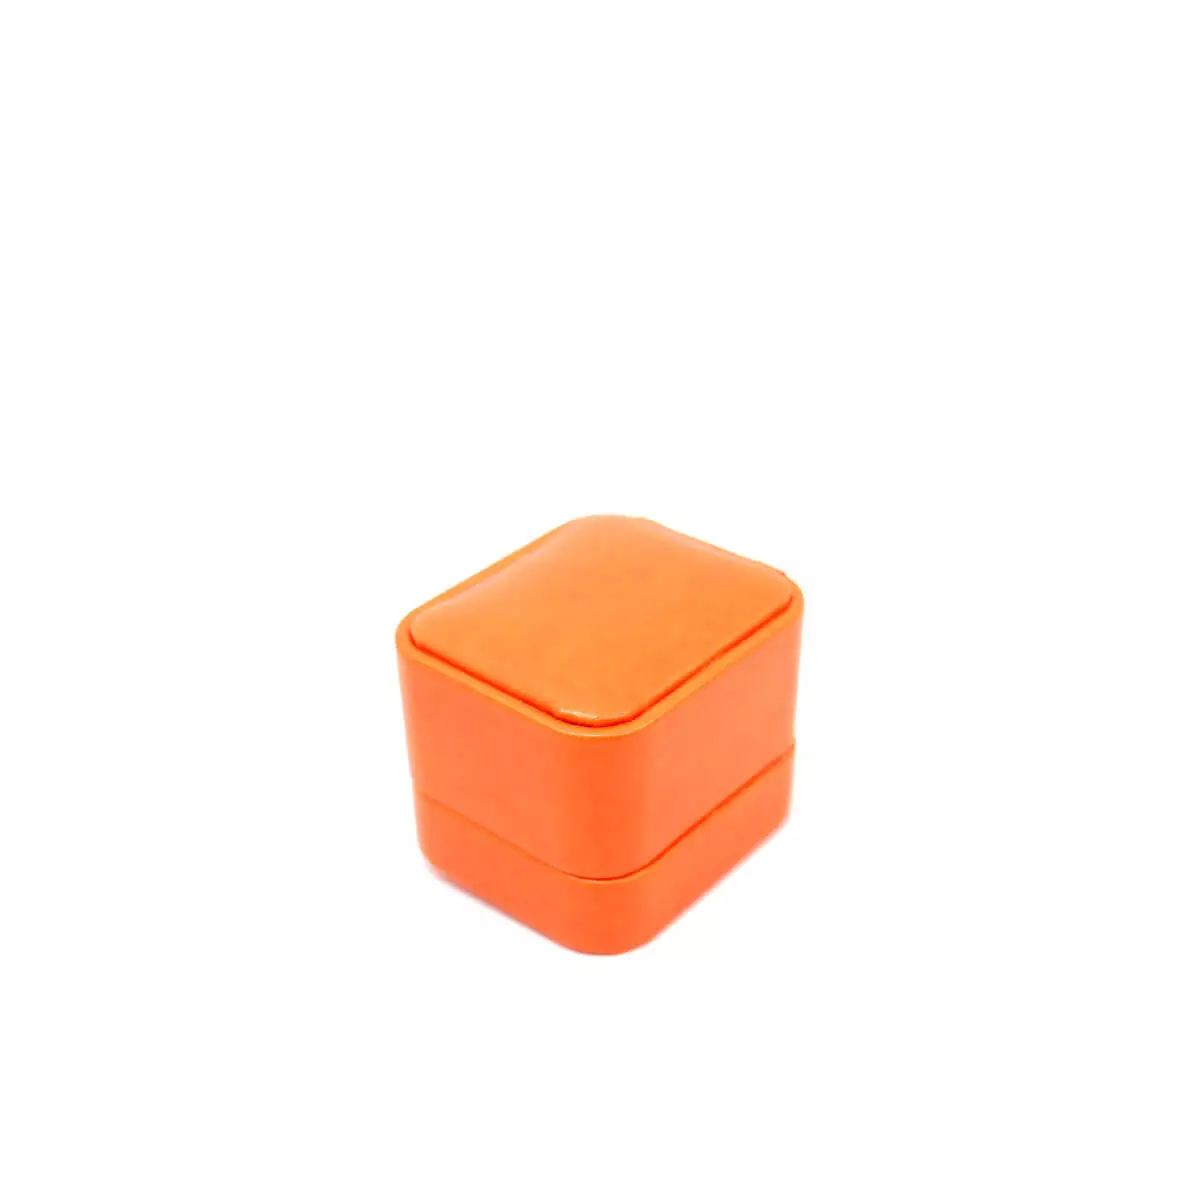 Stella Ring Box in orange side view